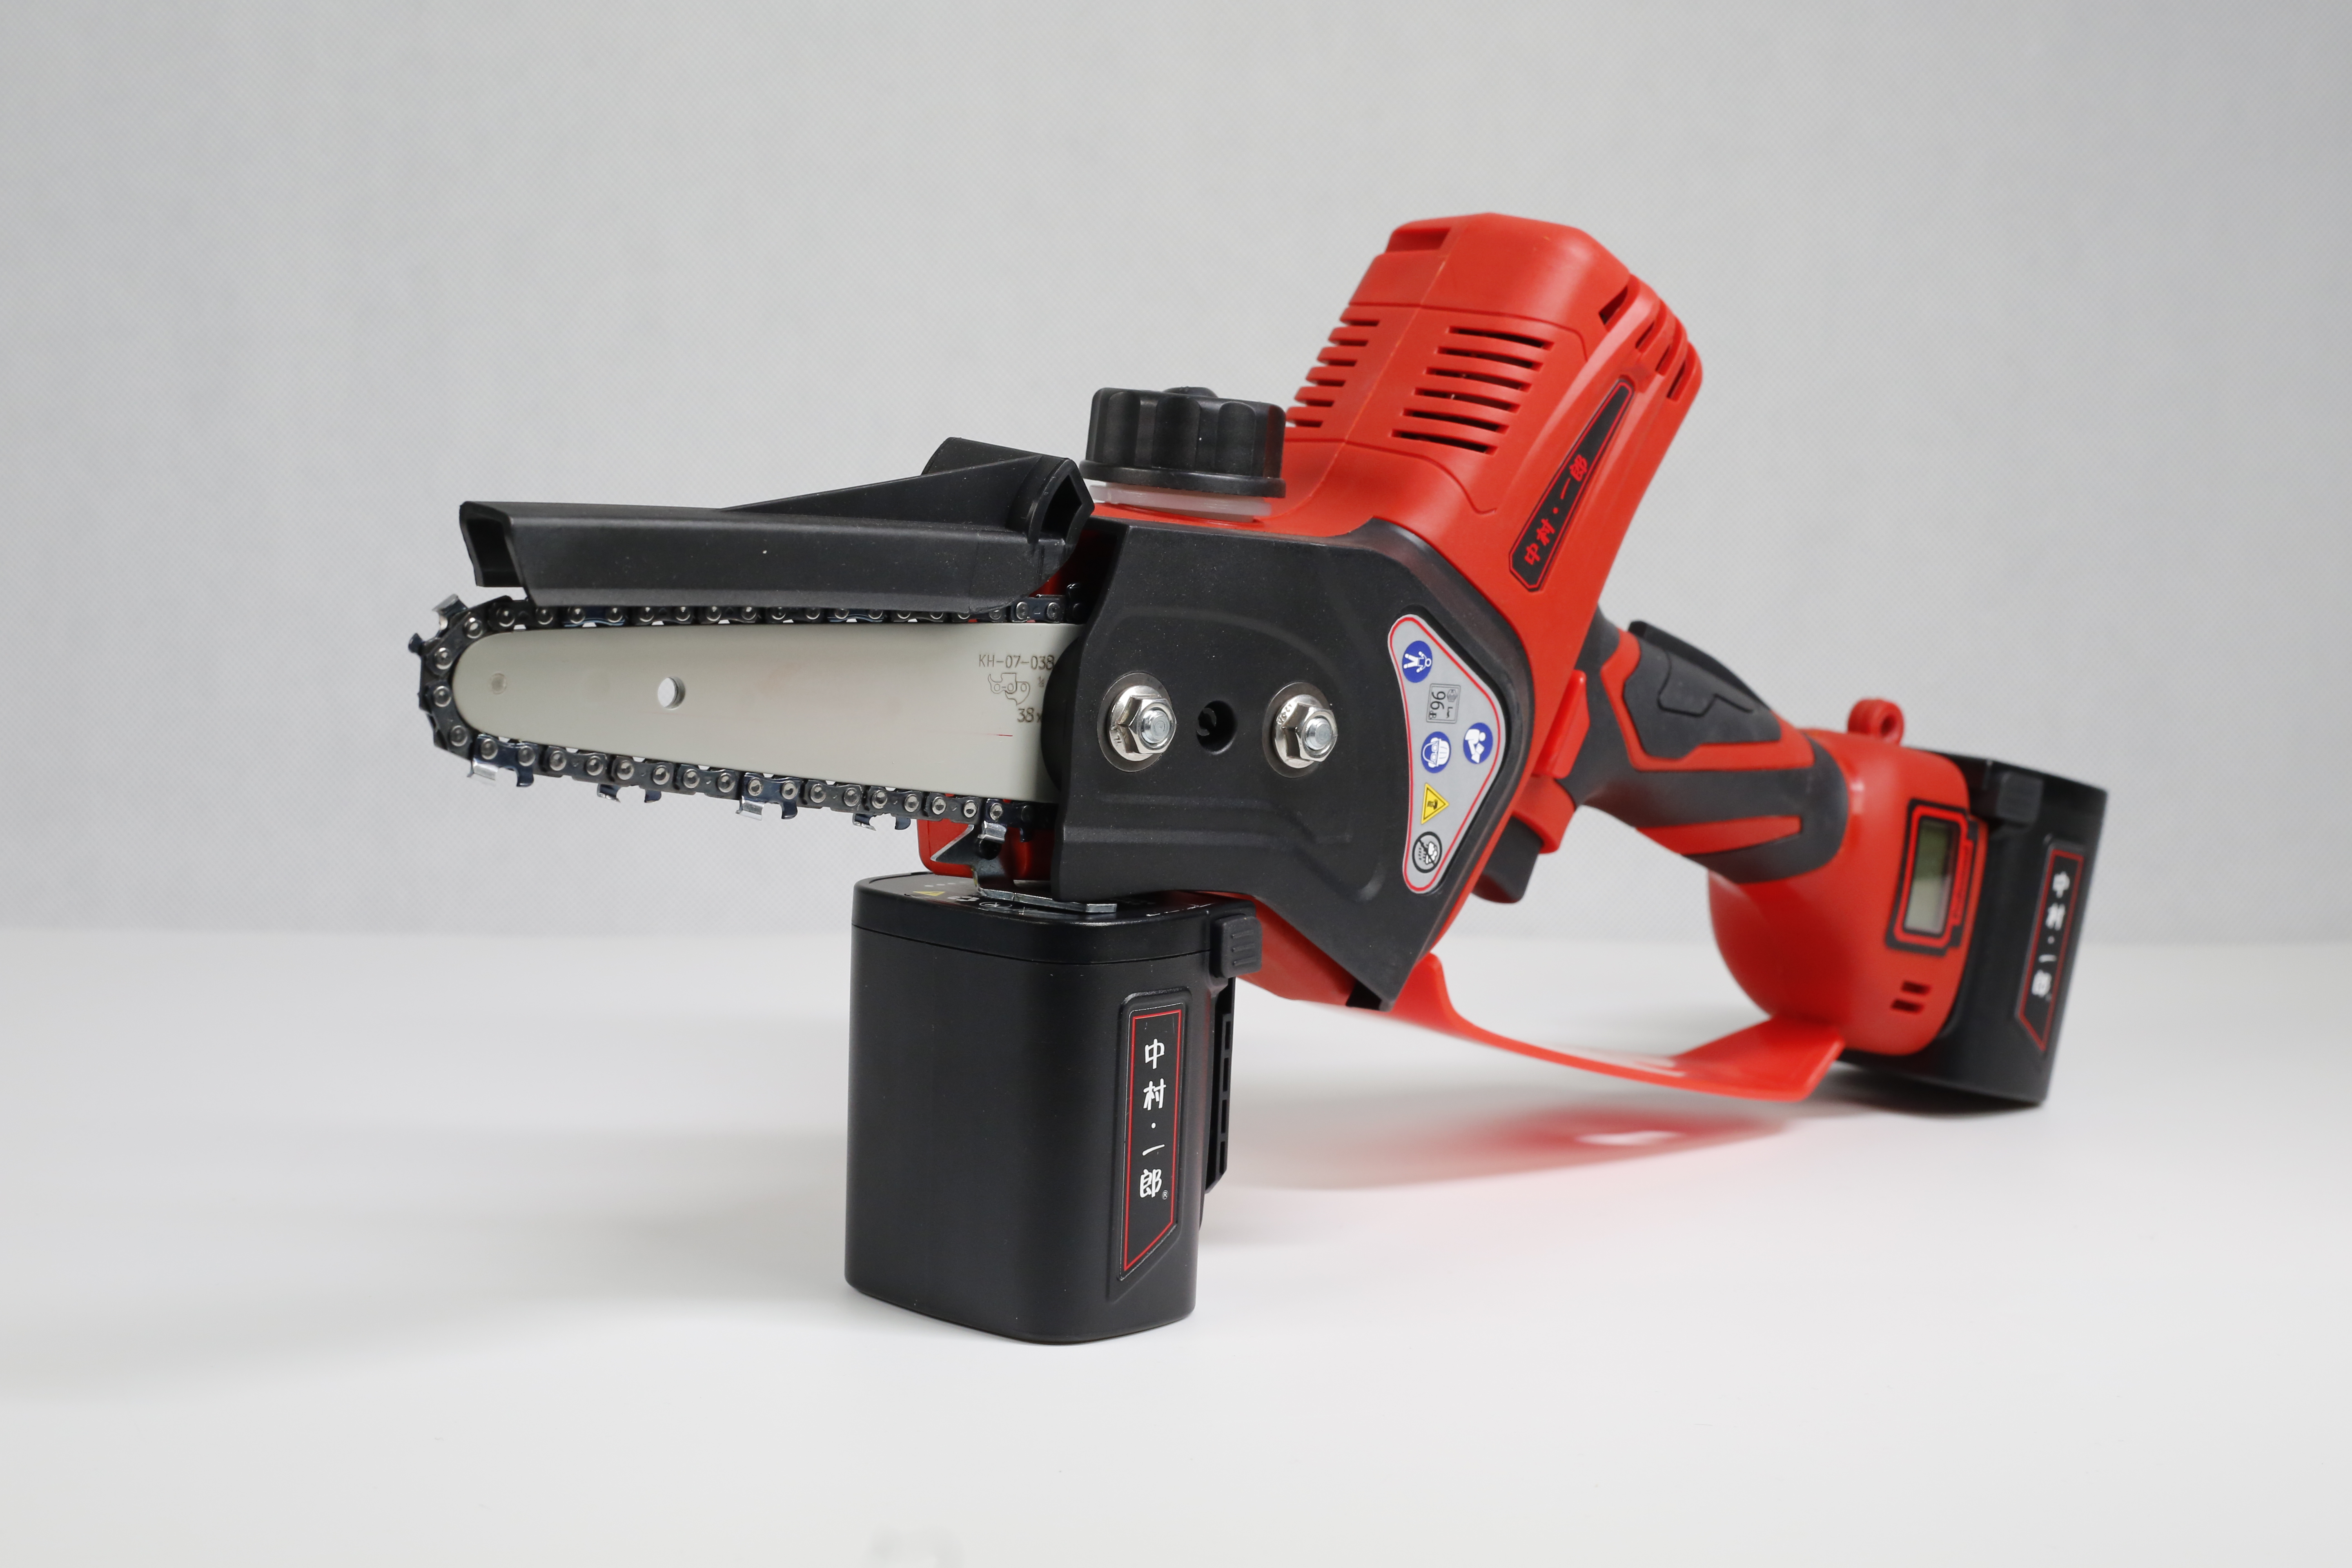 4inch Mini chainsaw-battery operated chainsaw ကြိုးမဲ့ 25.2V 2.5ah ဘက်ထရီနှင့်အစာရှောင်ခြင်းအားသွင်းစက်